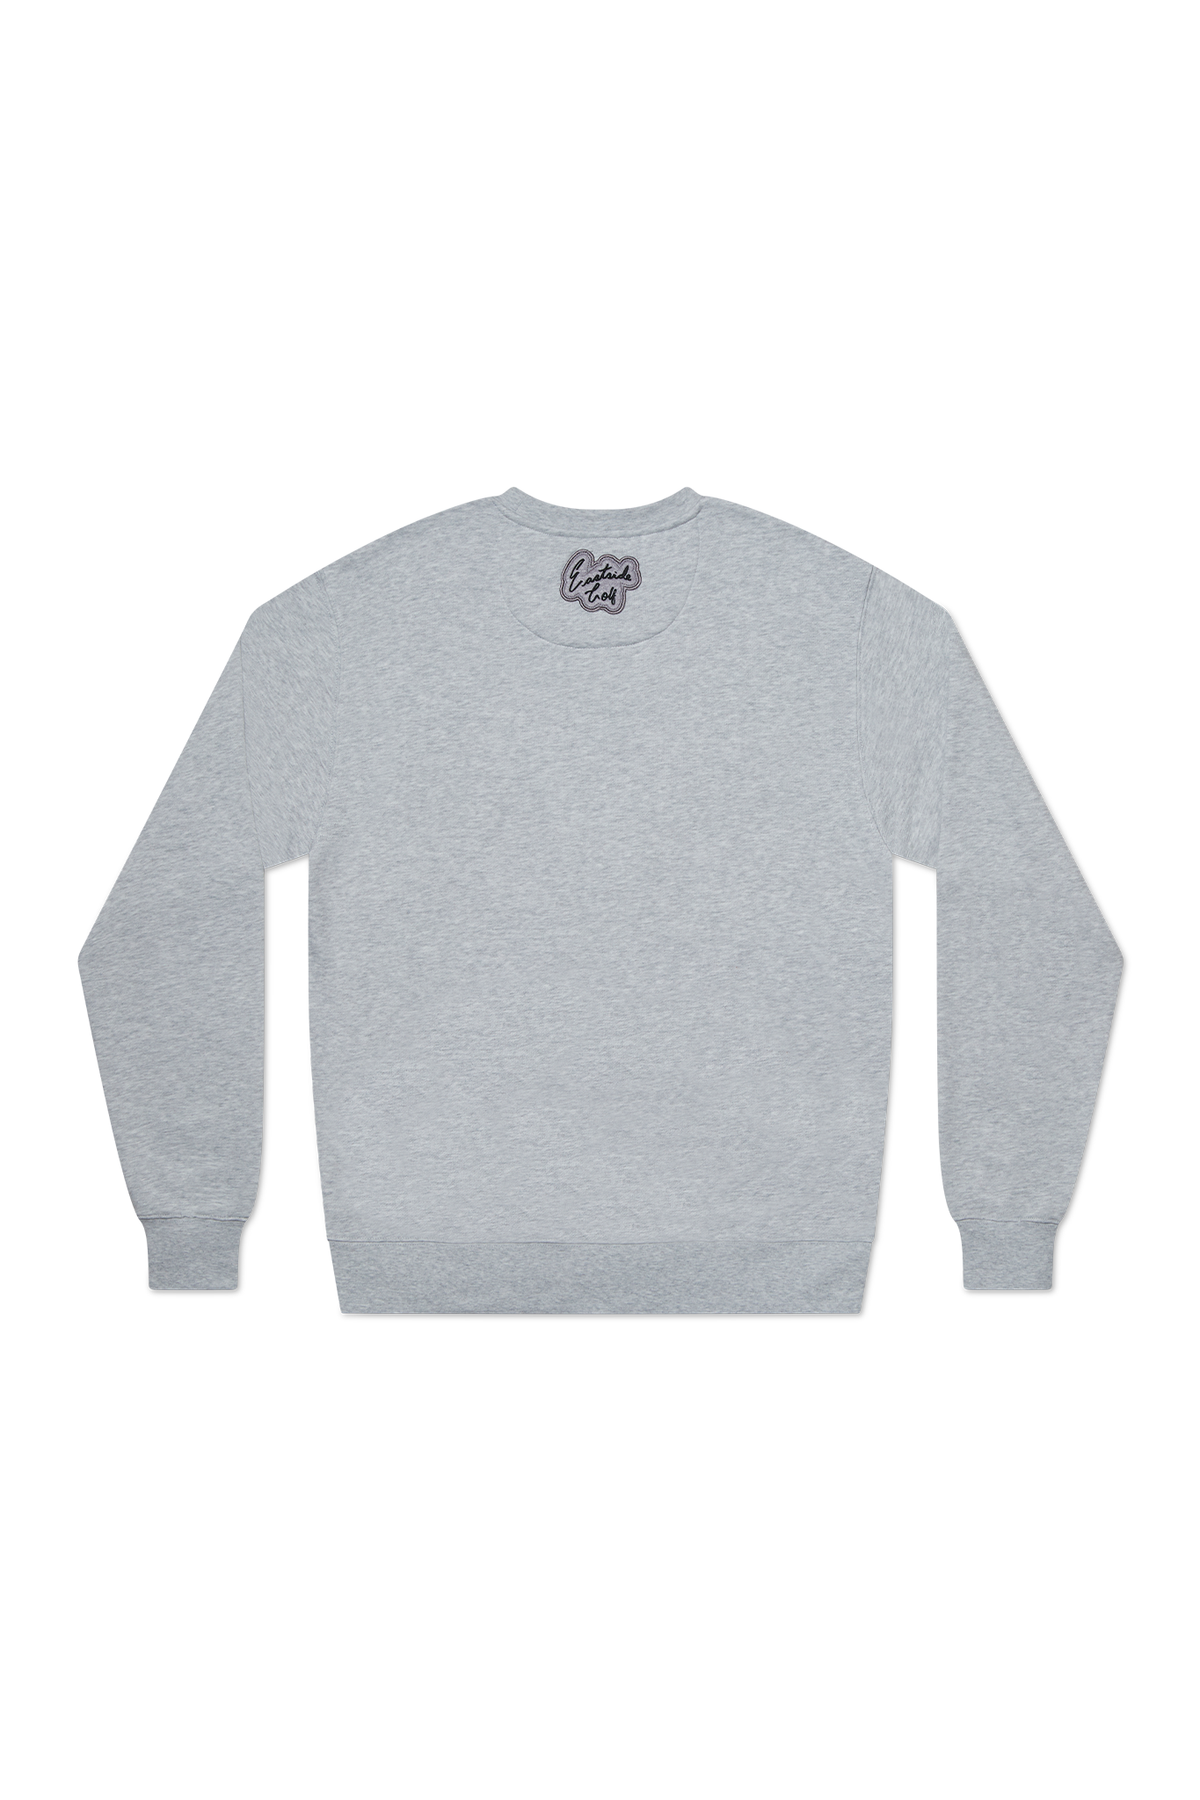 Port & Company Ash Grey Ultimate Crewneck Sweatshirt